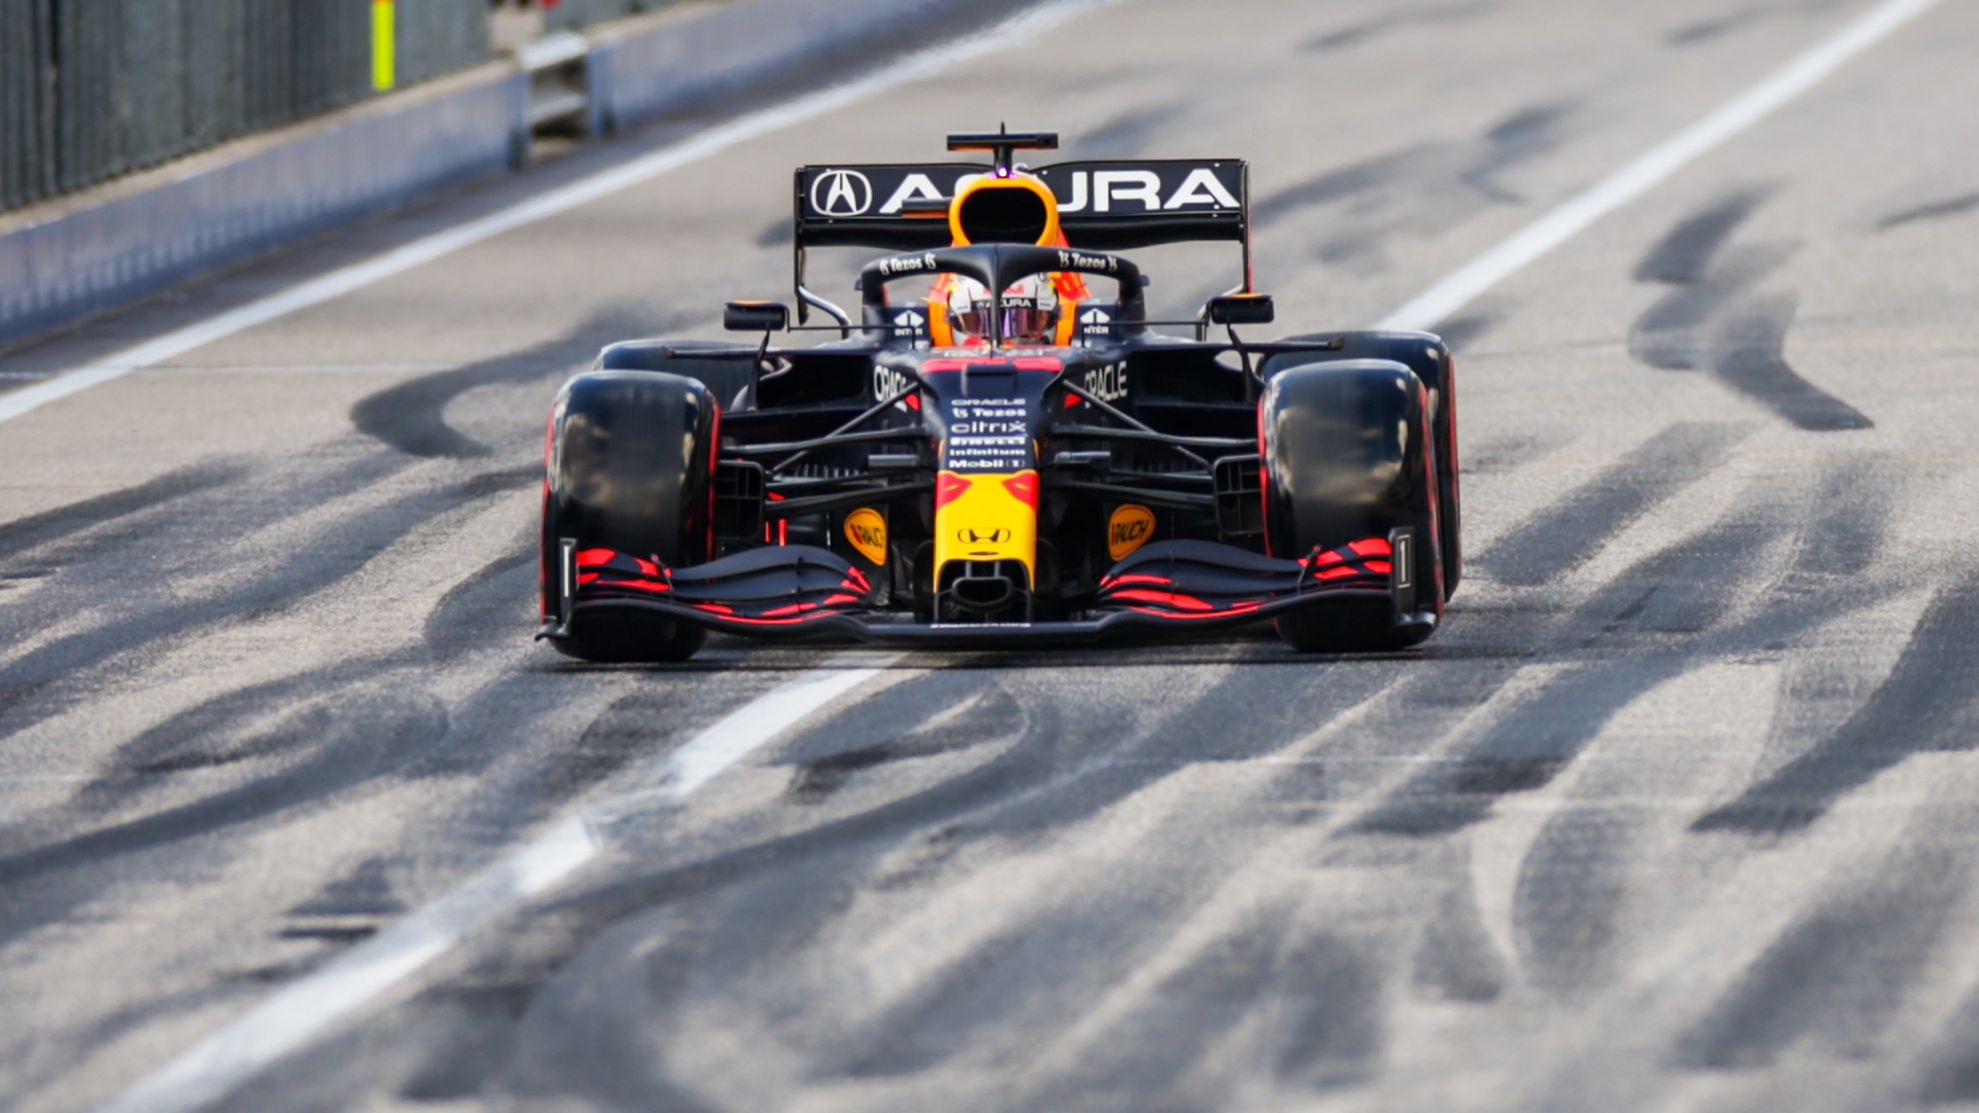 Max Verstappen claims pole, Daniel Ricciardo to start on third row at US Grand Prix